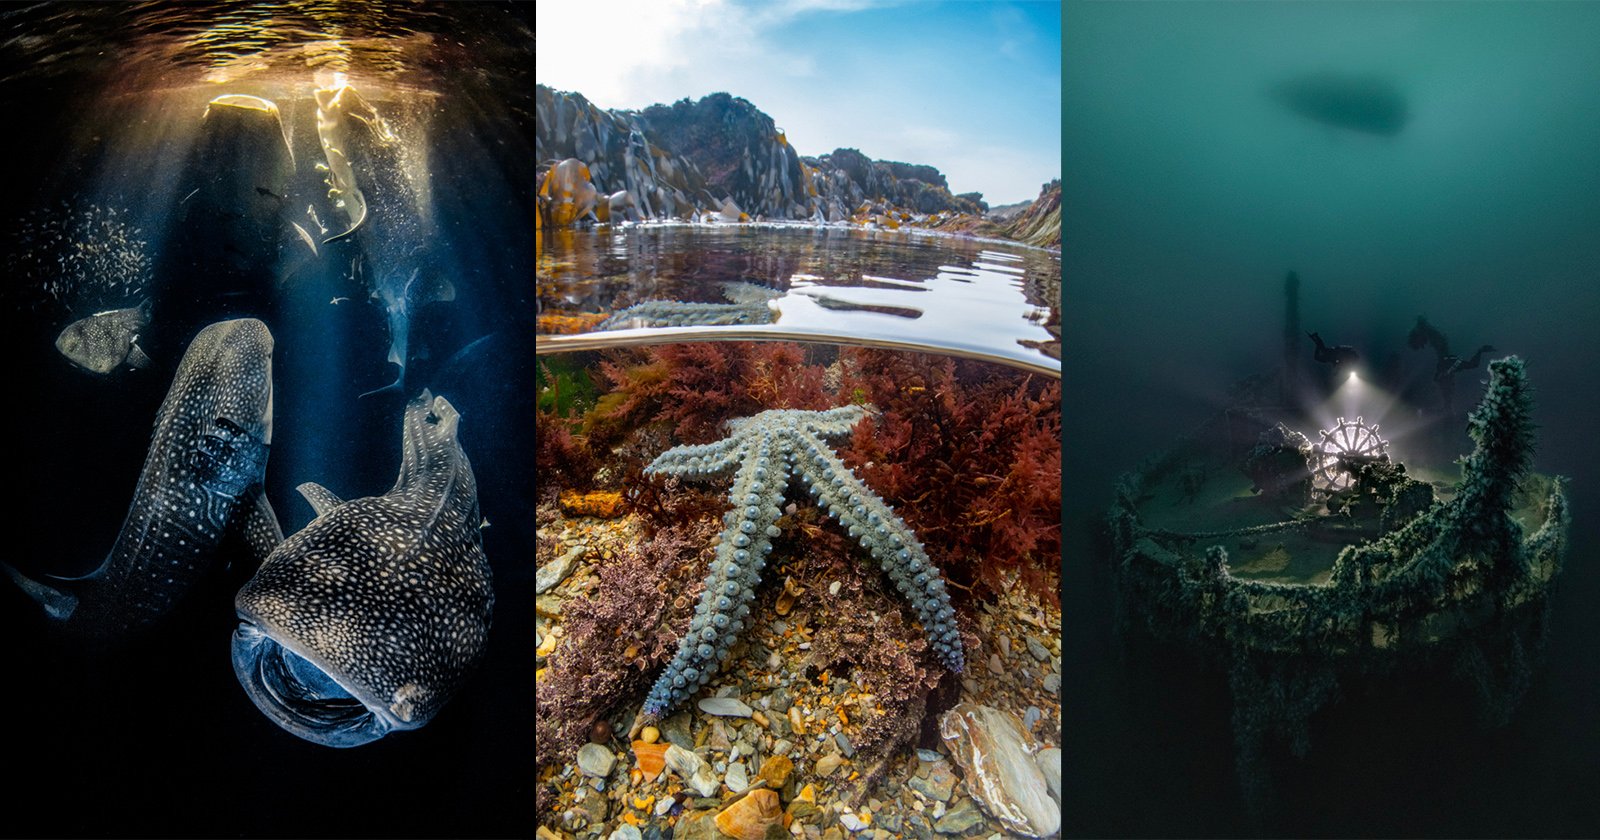 The Underwater Photographer of the Year 2022 winners